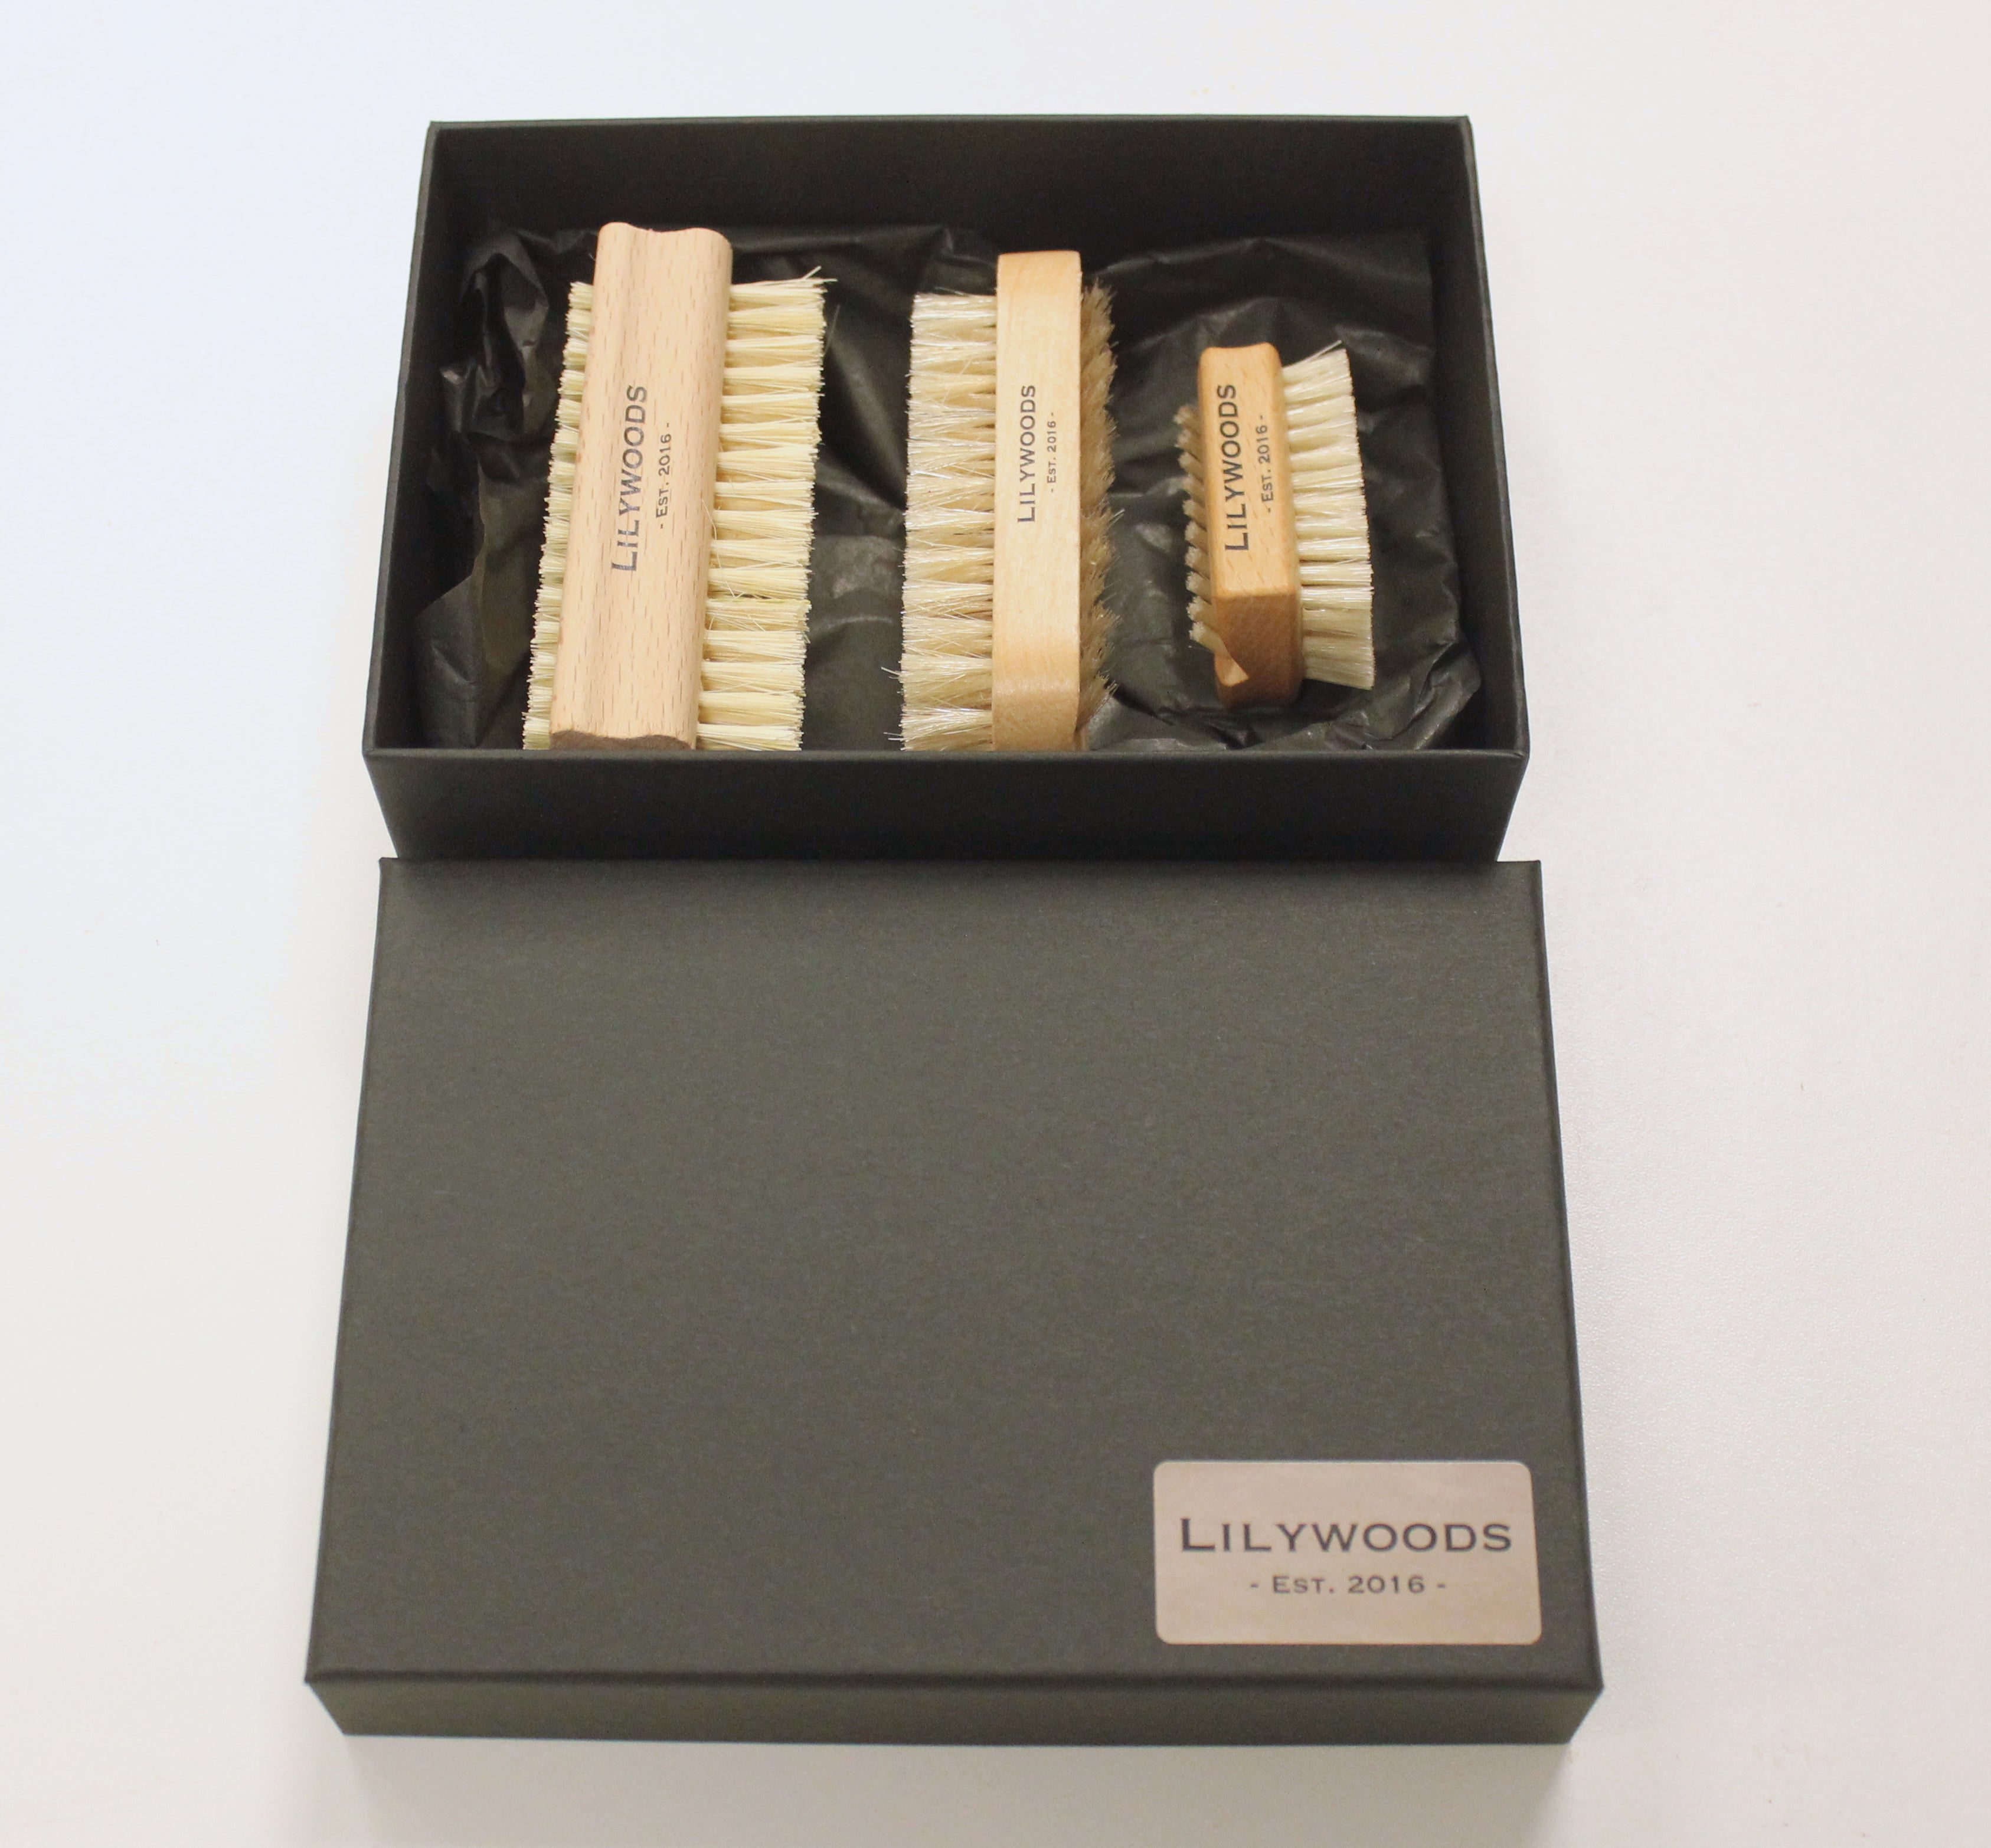 Wooden Nail Brush Gift Set Collection - 3 Nail Brushes: Tough Cactus Bristles, Soft Bristles & Mini Travel Nail Brush